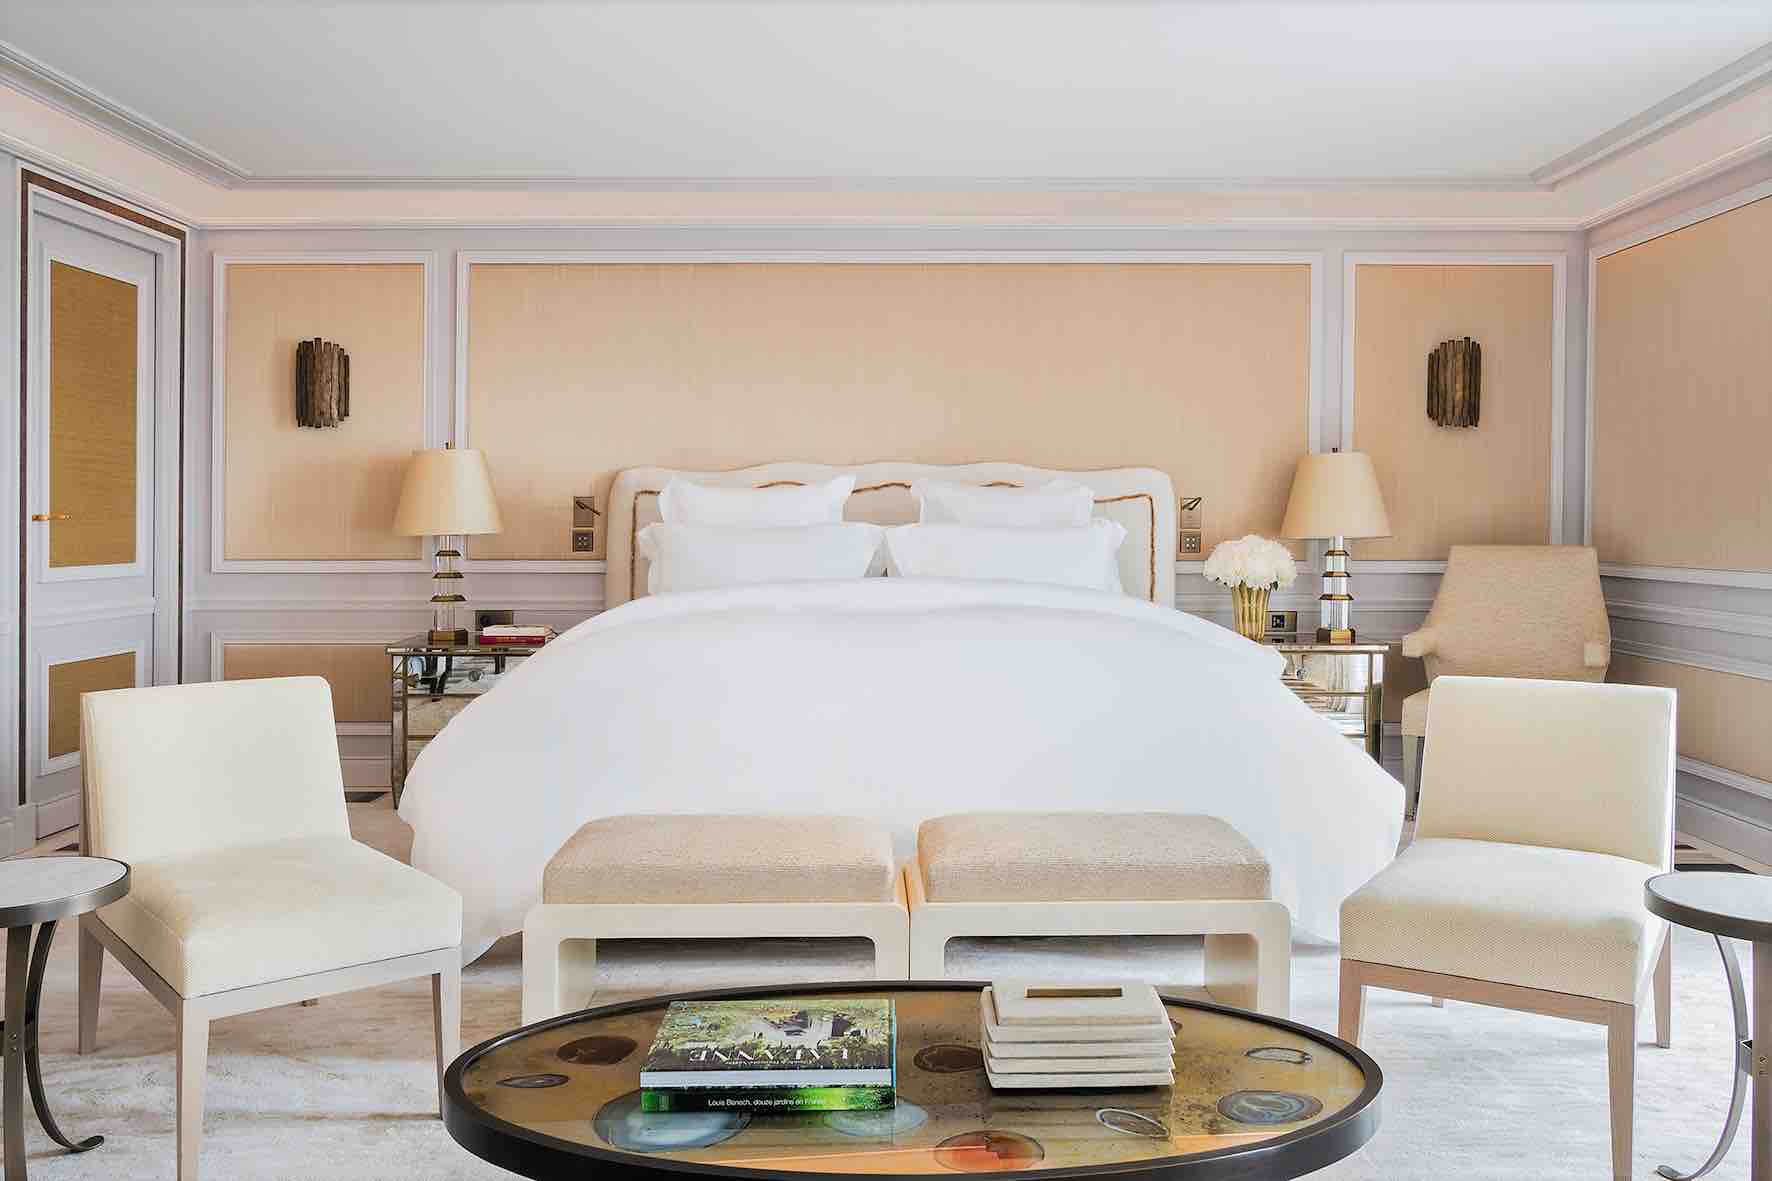 3. Suite Louis XV - Bed room